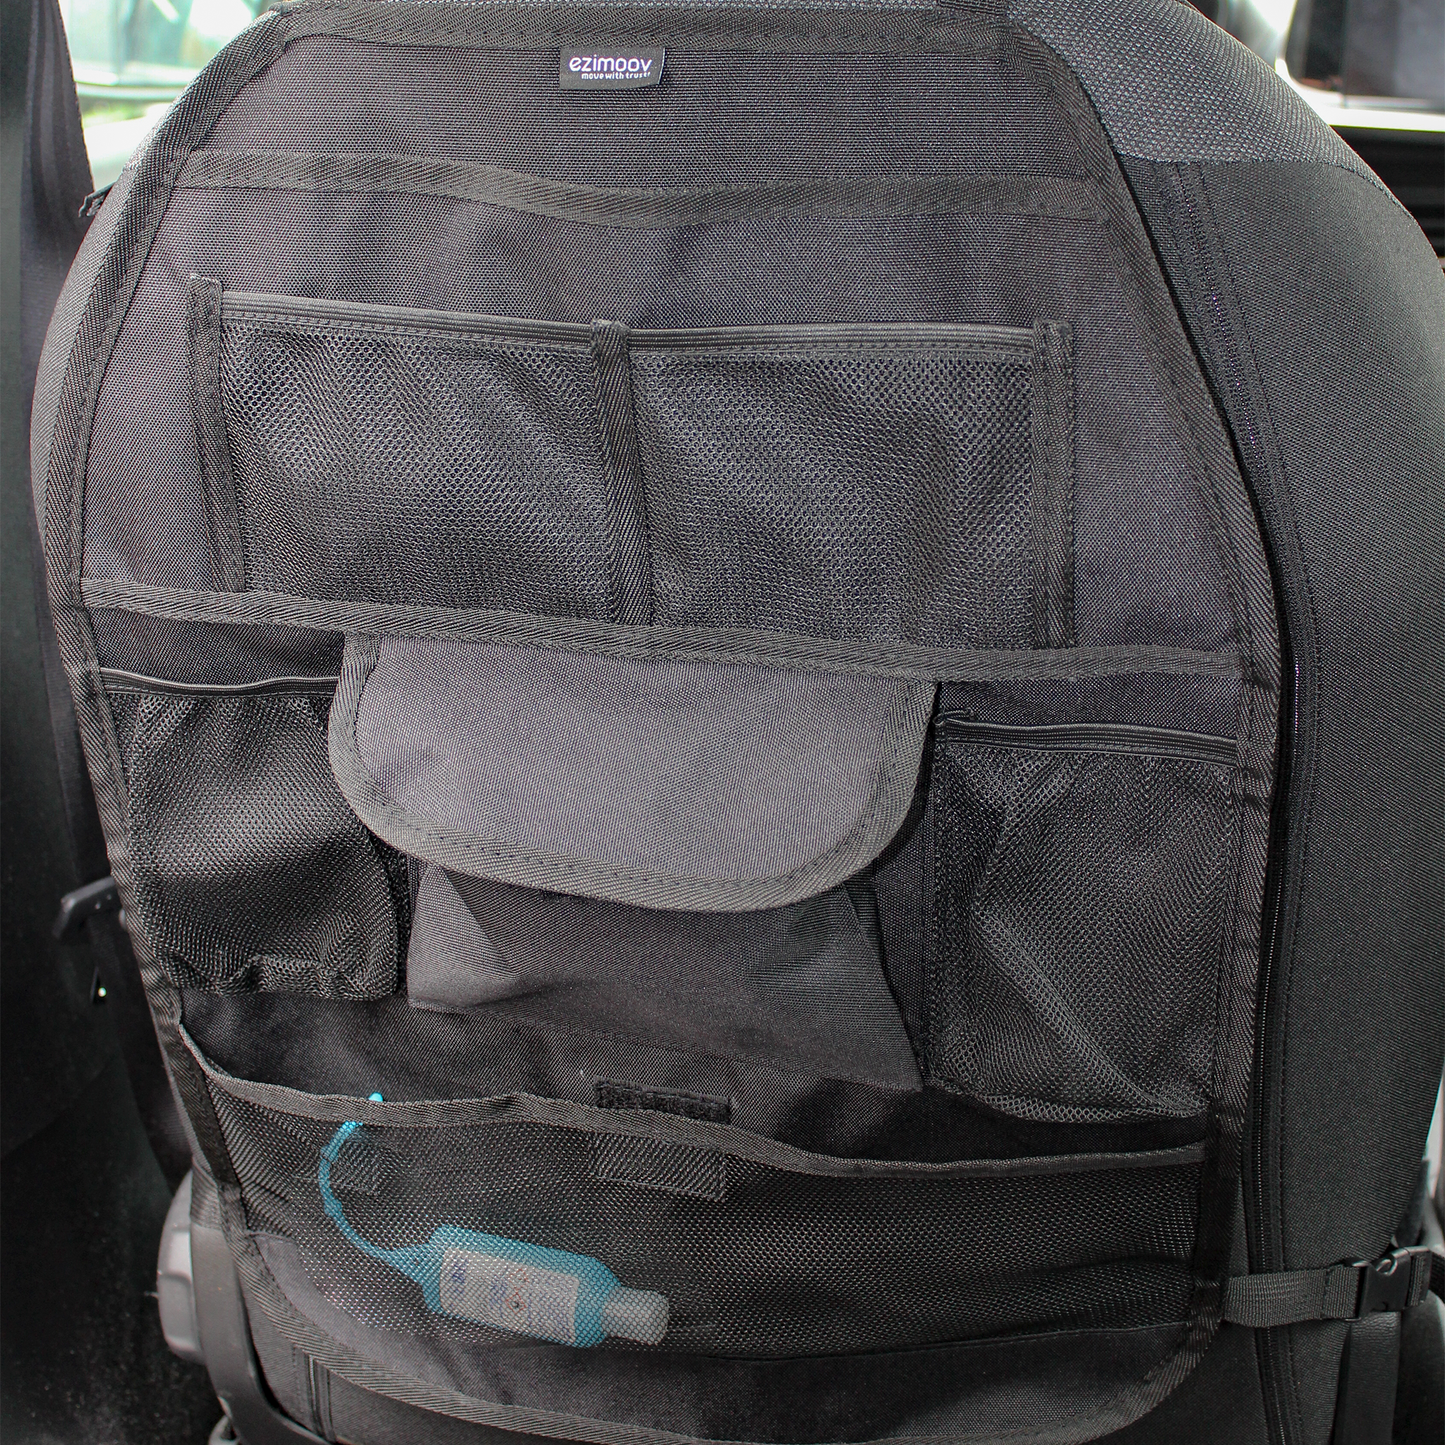 Ezimoov Ezi Travel Plus - Car Seat Organiser and Protector